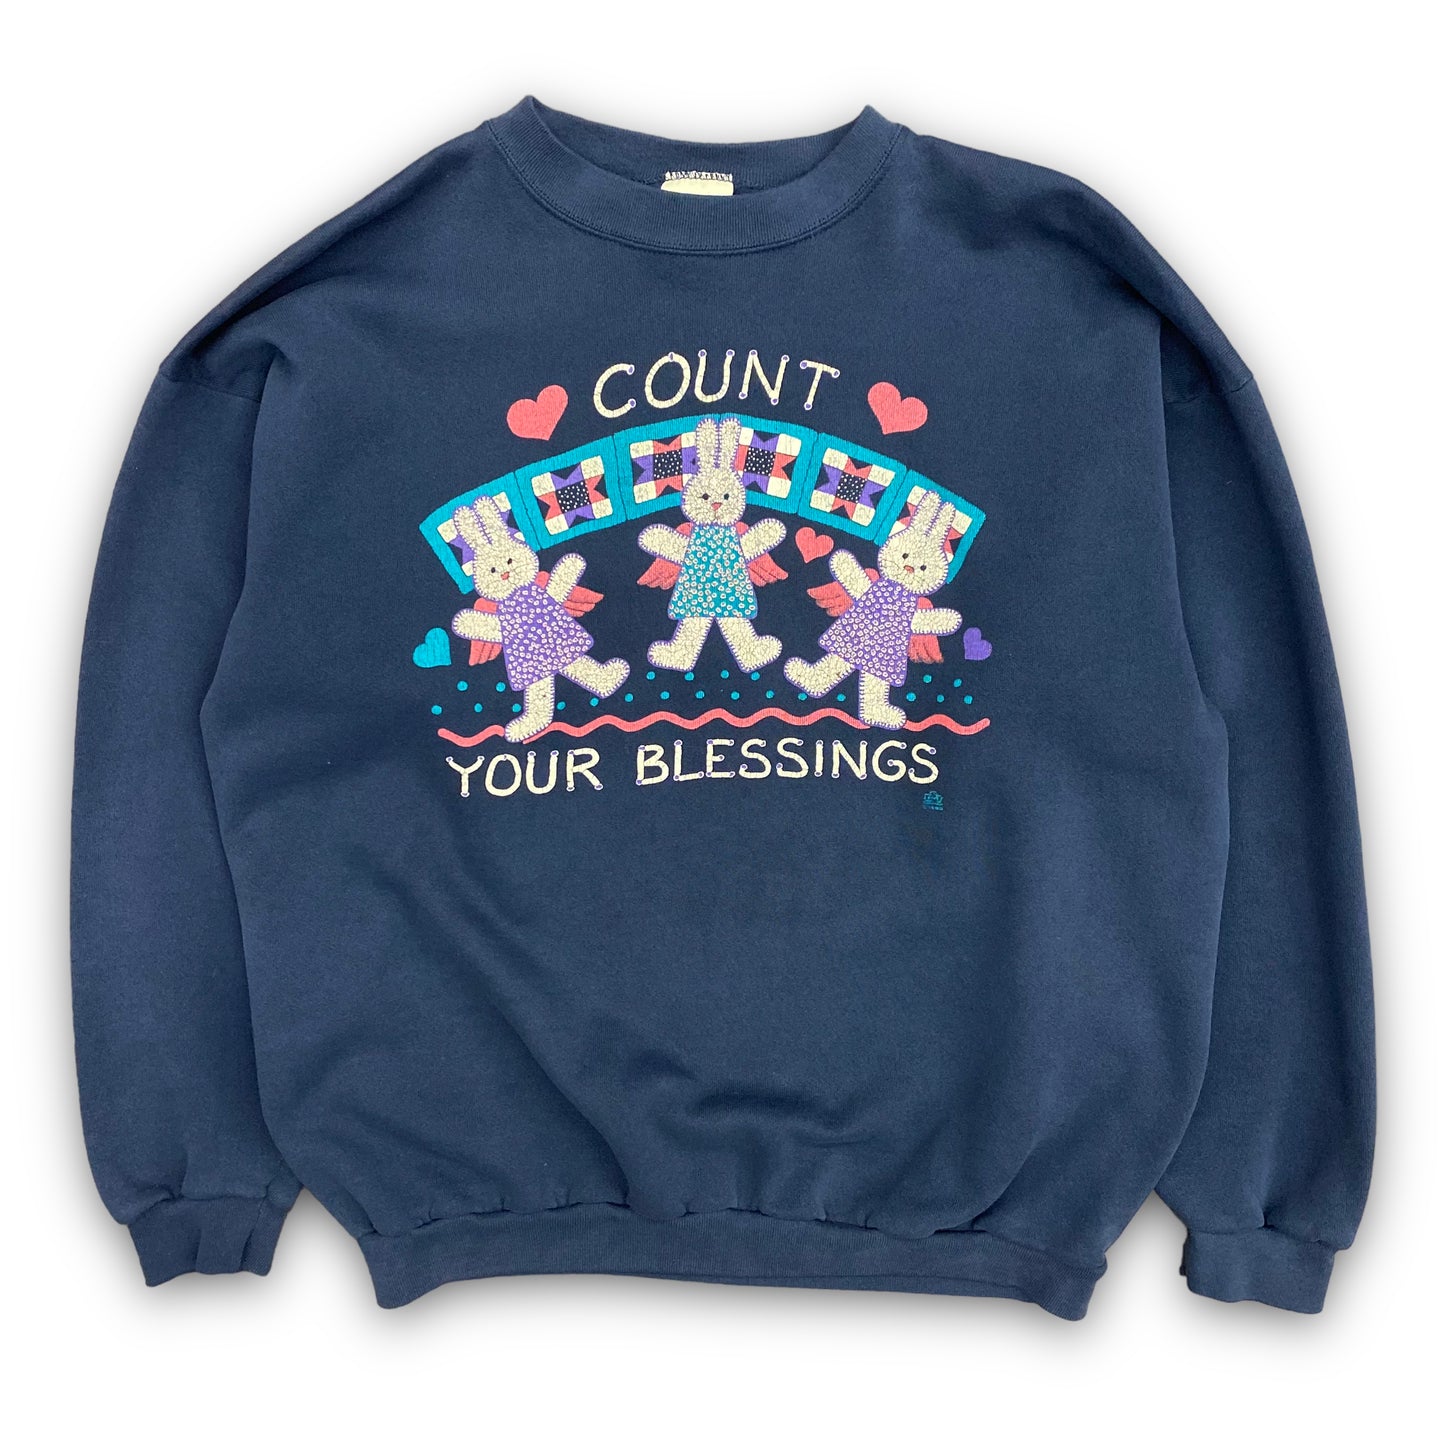 Vintage 1990s "Count Your Blessings" Bunnies Crewneck Sweatshirt - Size XL